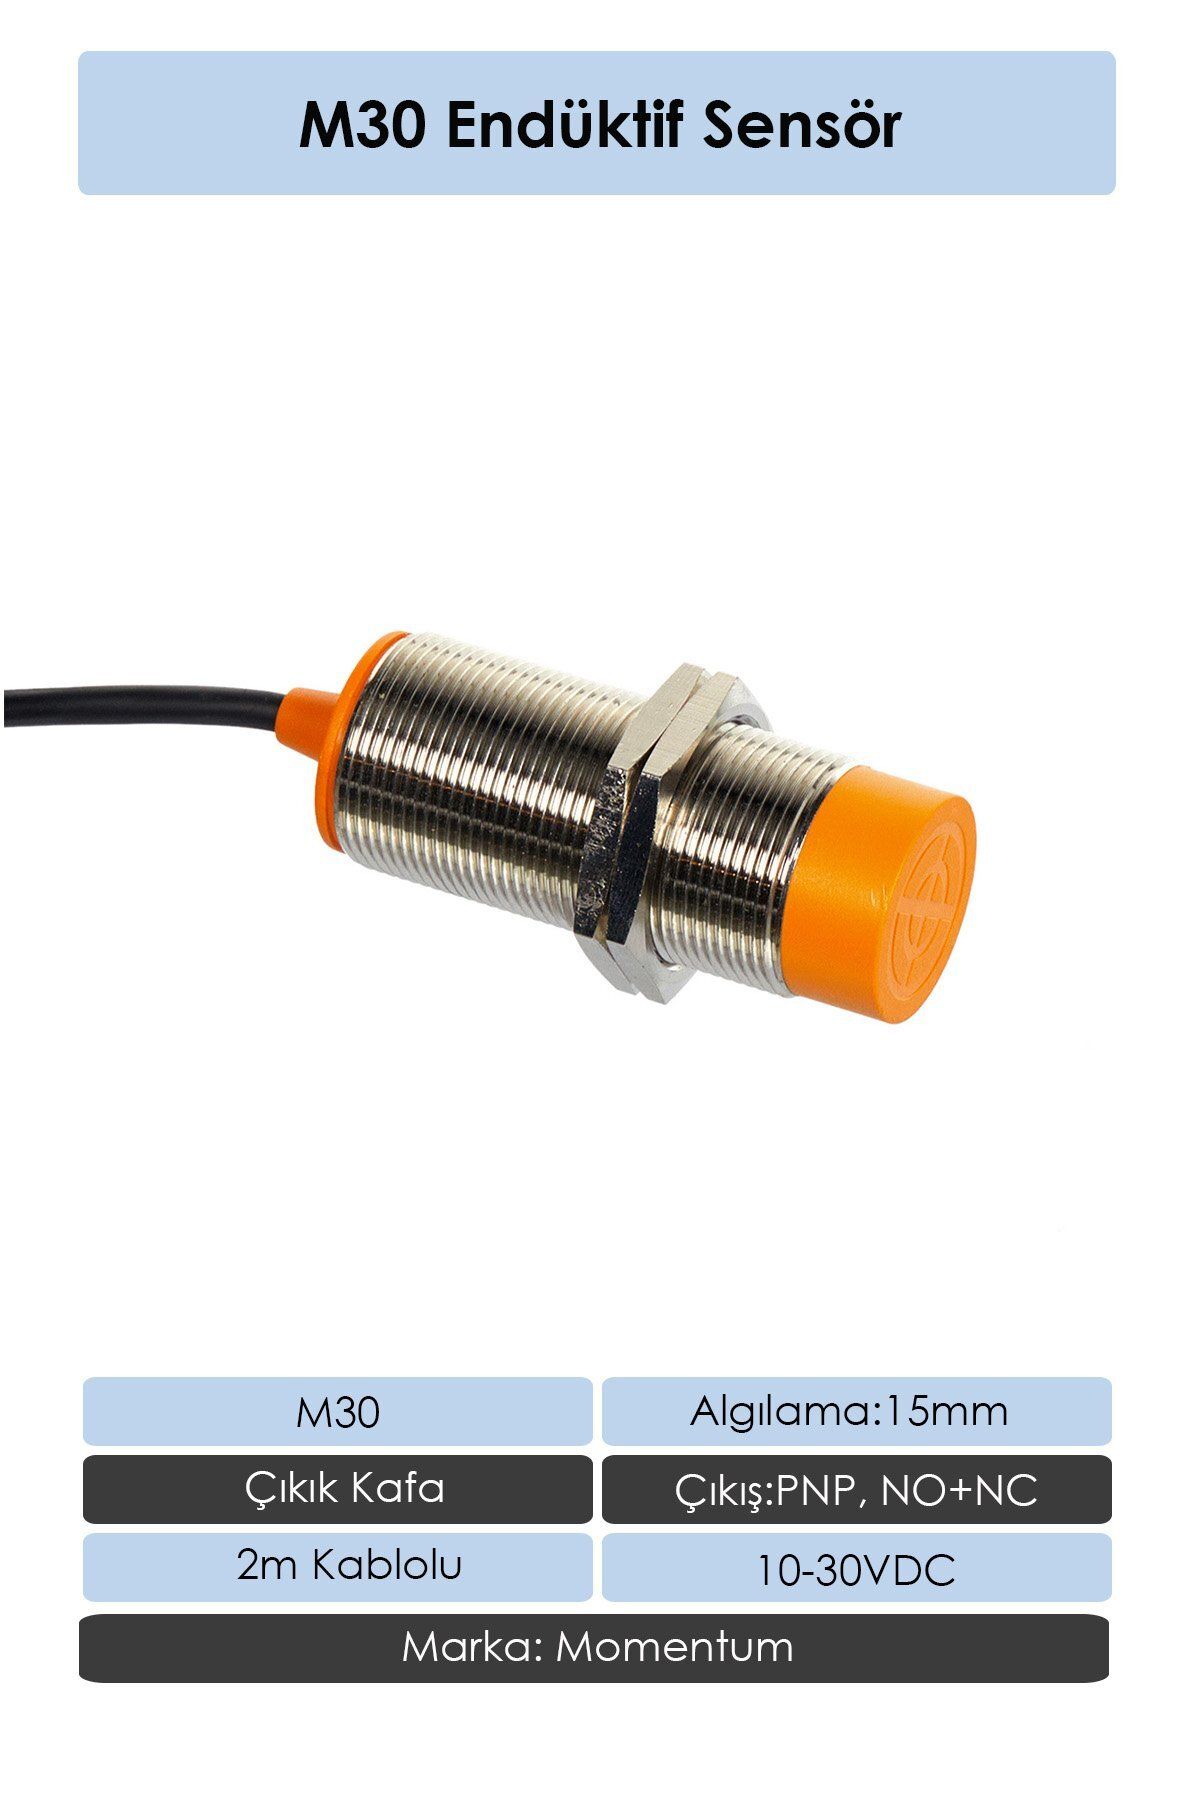 Momentum Sensör Endüktif M30 15mm Çıkık Kafa 2m Kablo PNP NO+NC LM30-3015PC